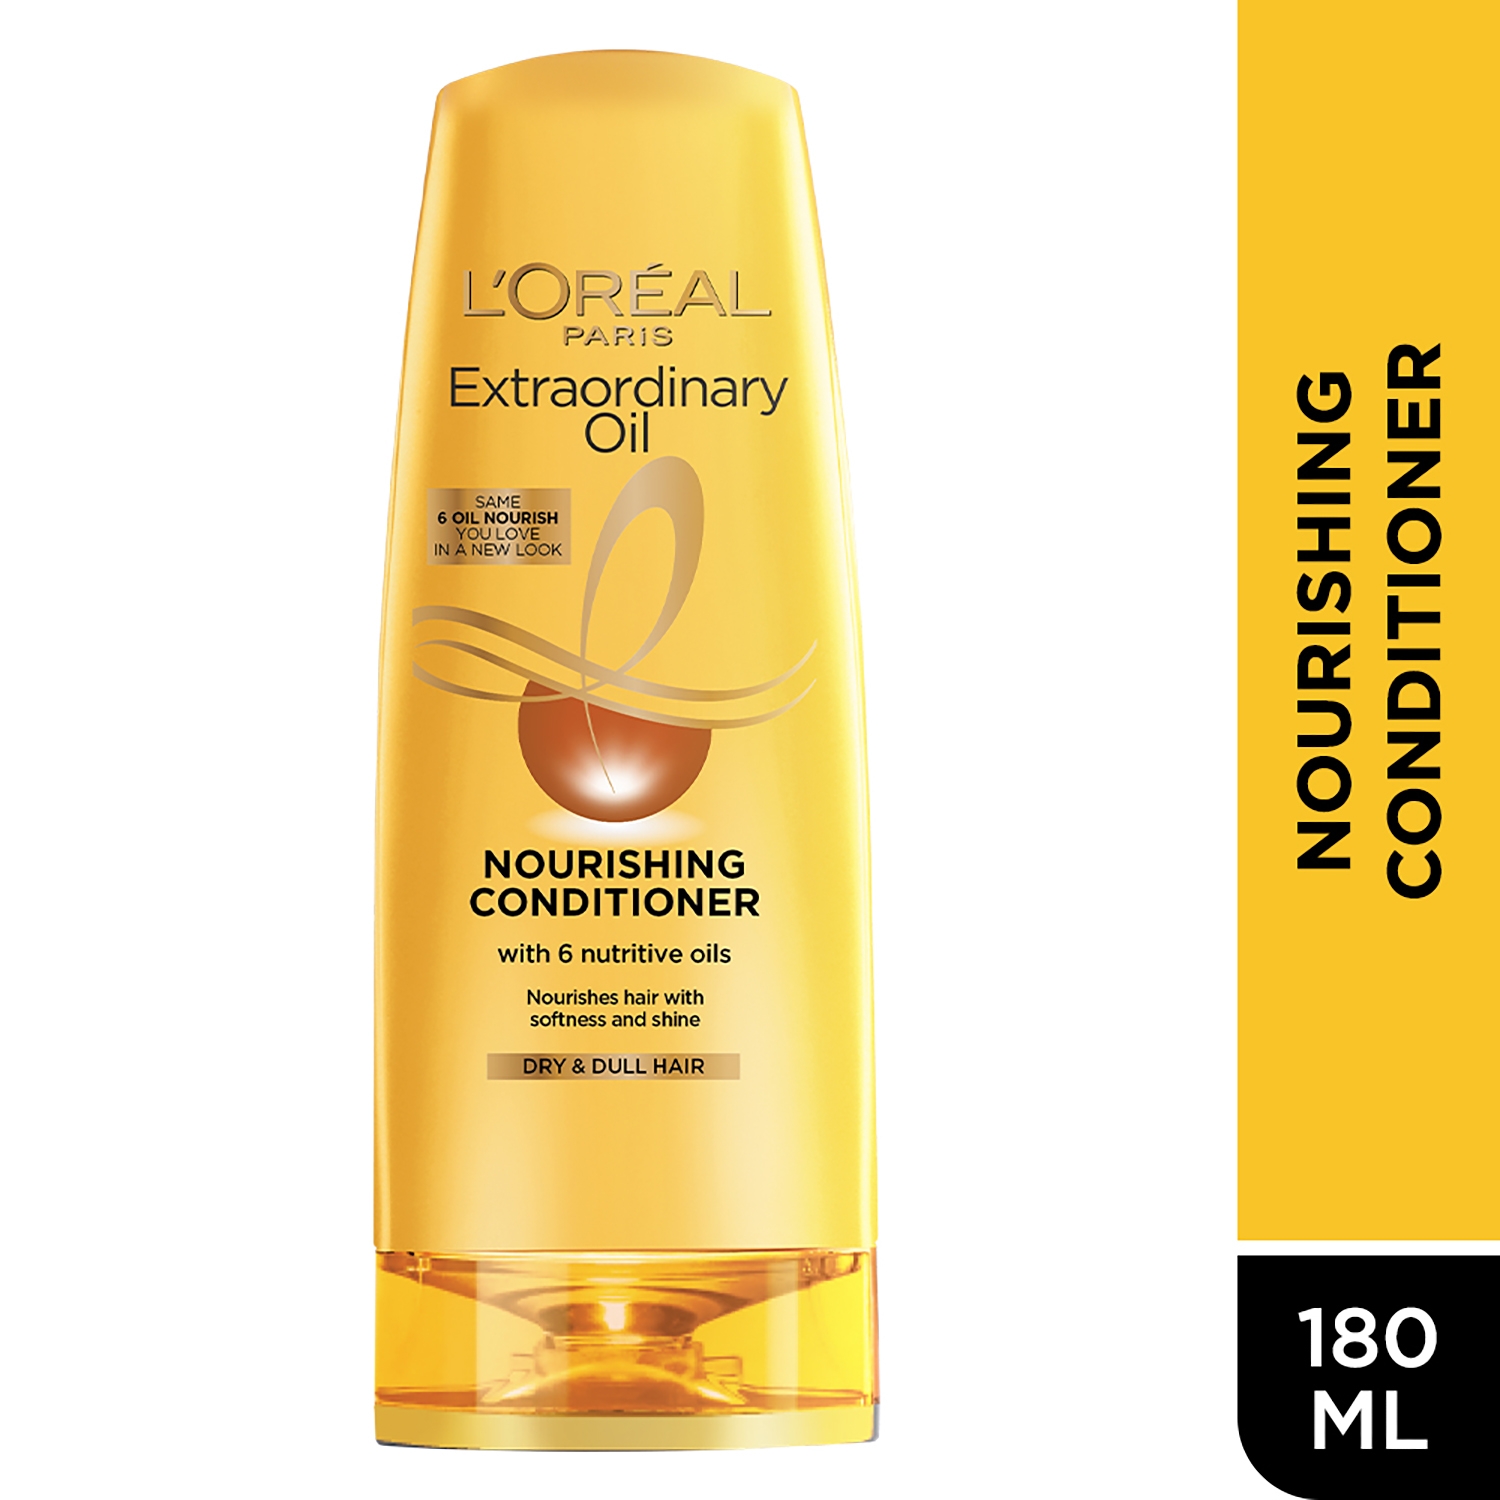 L'Oreal Paris | L'Oreal Paris Extraordinary Oil Nourishing Conditioner for Dry & Dull Hair (180ml)